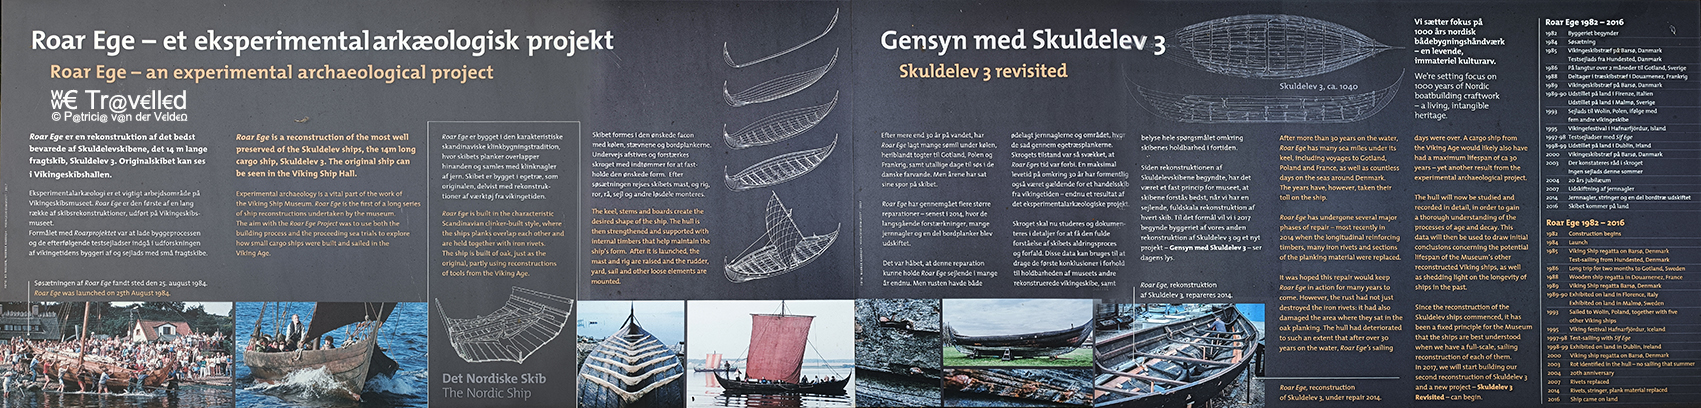 Roskilde - Vikingmuseum - Informatiebord Archeologisch Experiment Roar Ege Skuldelev 3